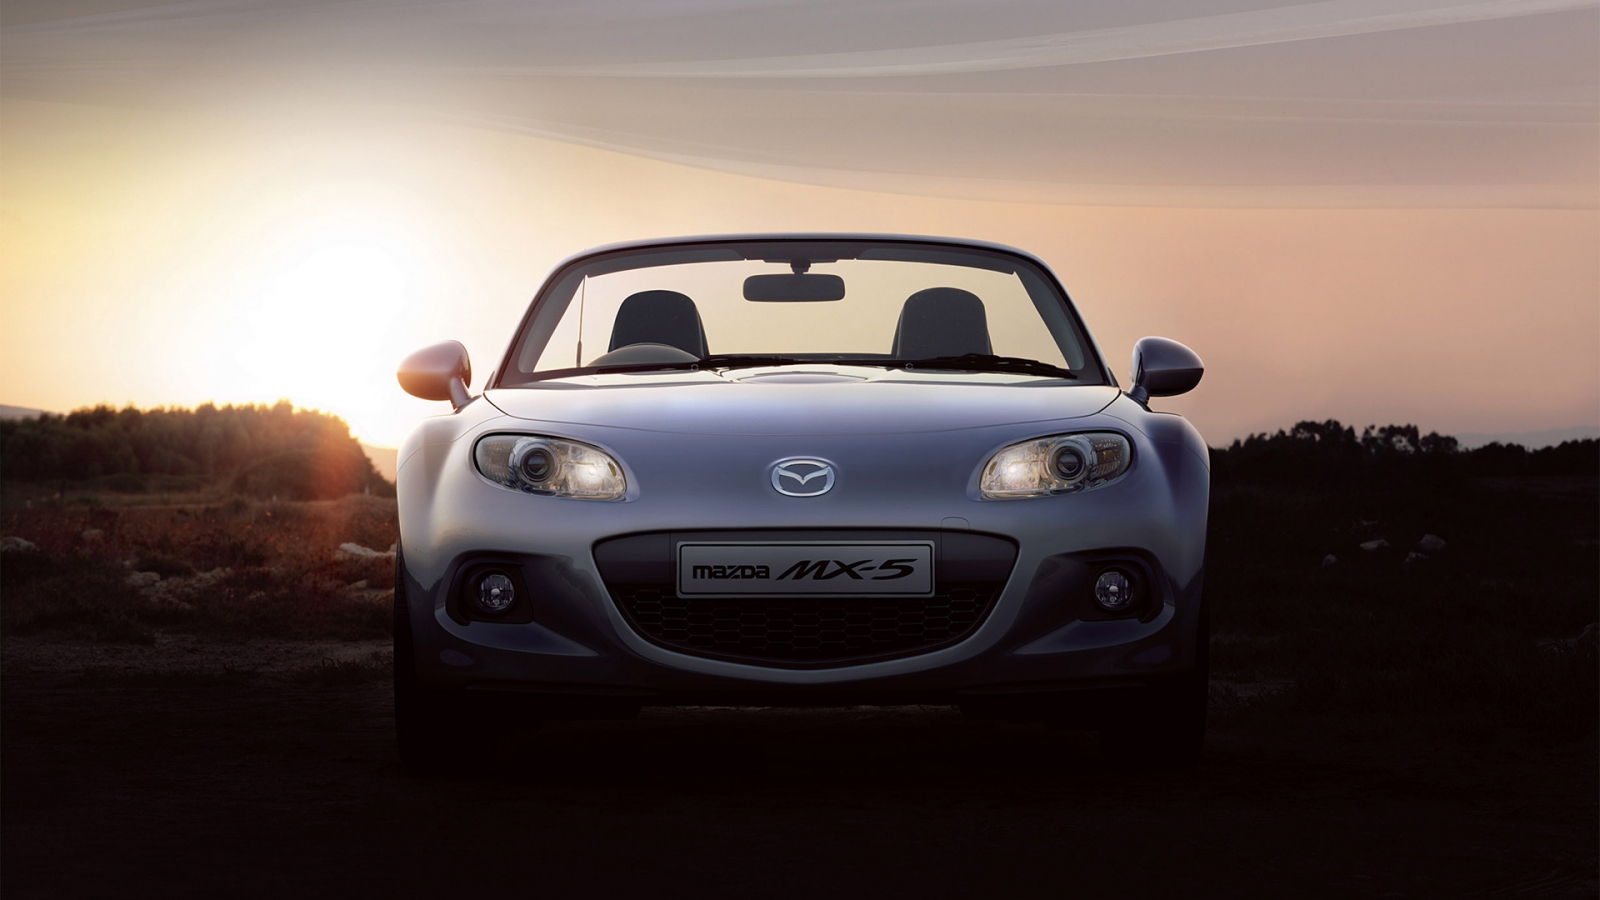 2013 Mazda MX 5 Roadster for 1600 x 900 HDTV resolution